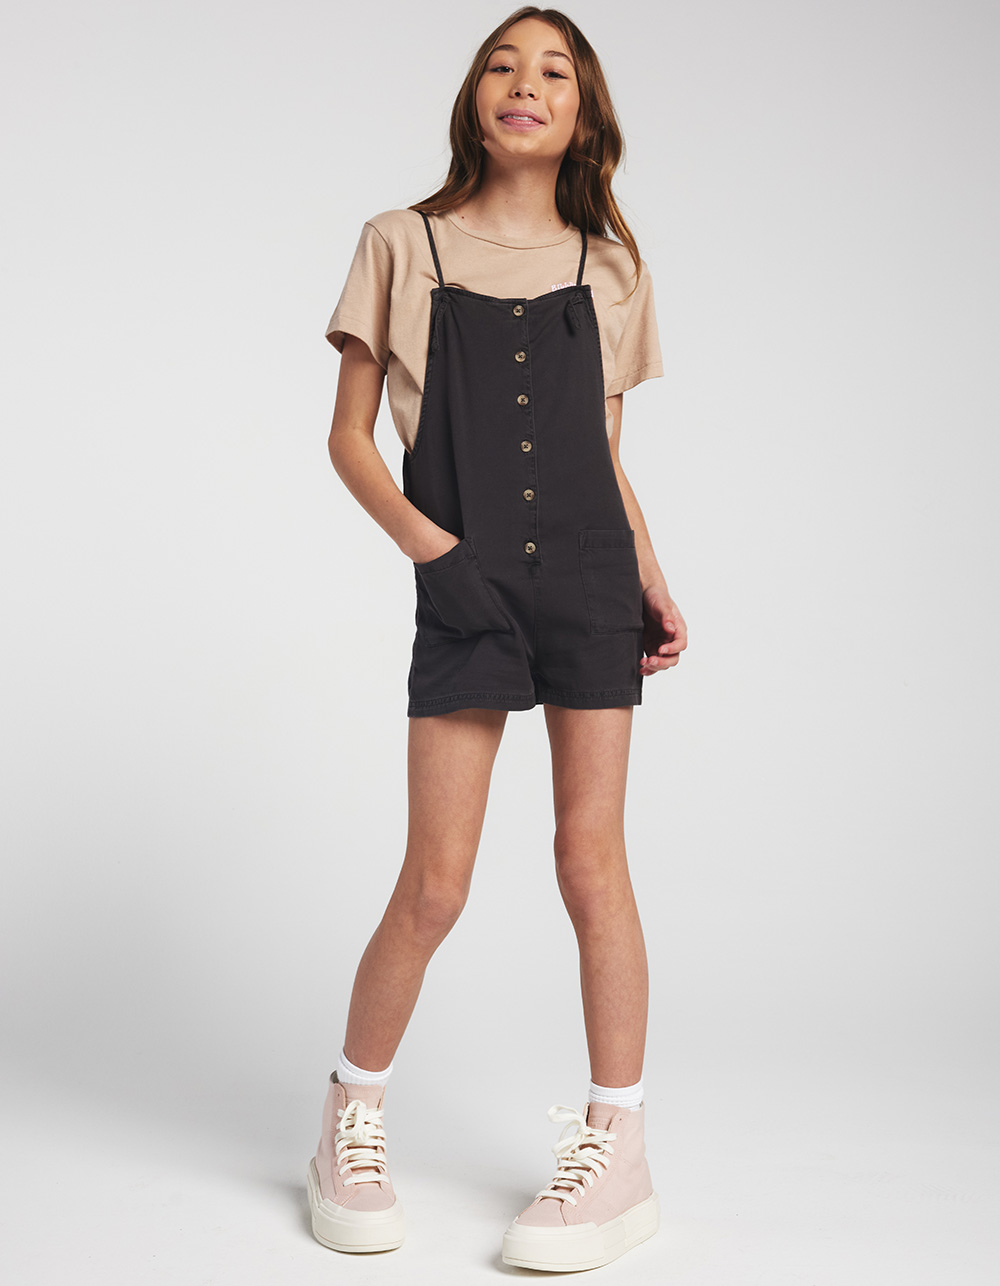 Girls Activewear Tops  Cute Girls' Clothes – Hayden Girls